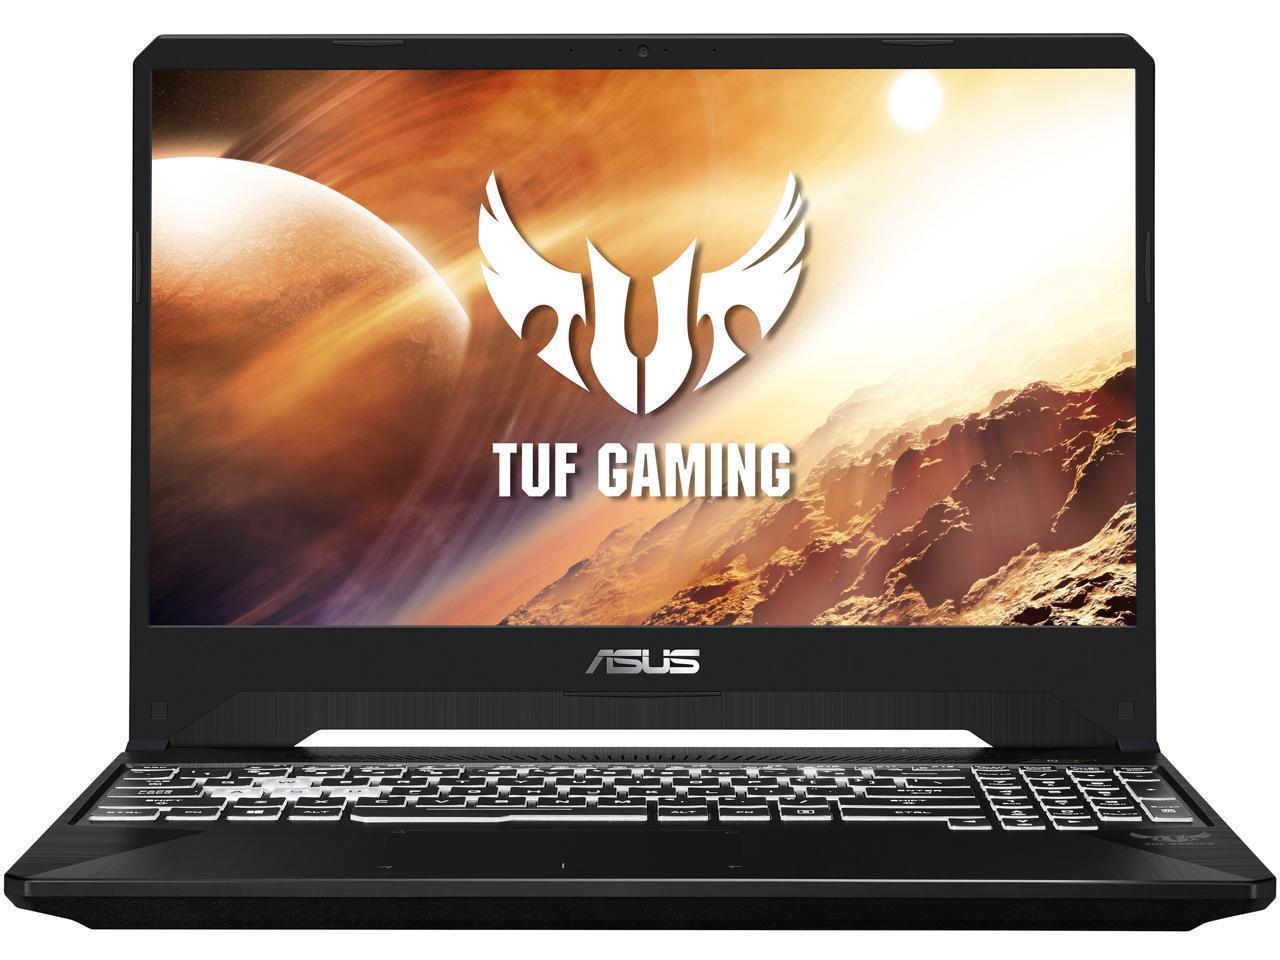 ASUS TUF Gaming 15.6 Inch Intel Core i5 9th Gen 8GB RAM 512GB SSD